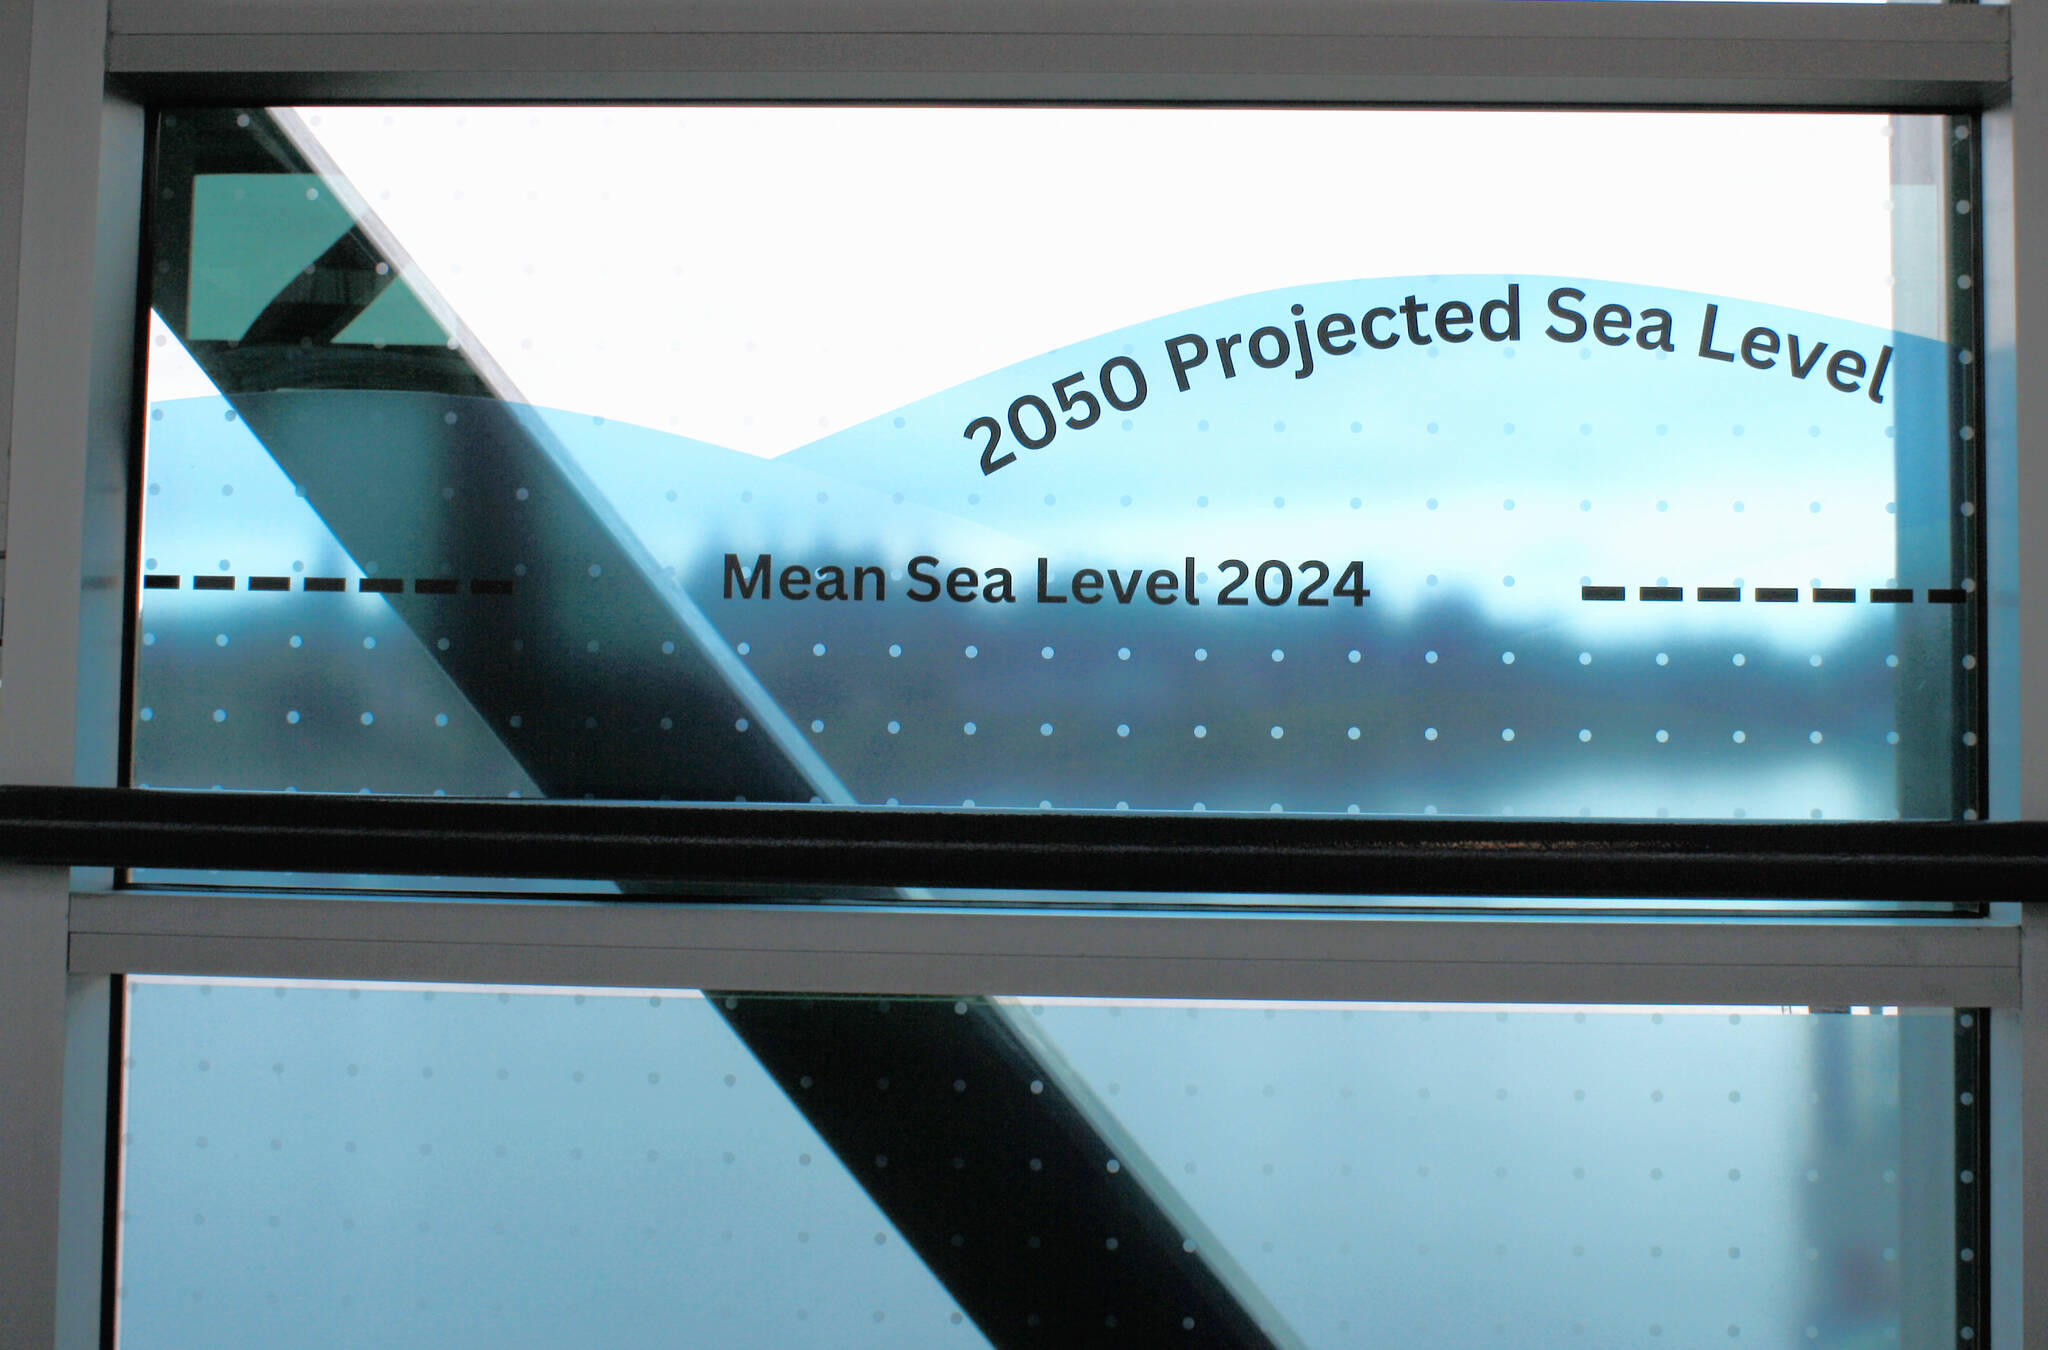 Molly Hetherwick/Kitsap News Group photos
A window decal demonstrating global sea level rise, installed on a window of the Bainbridge Island Ferry Terminal June 28.